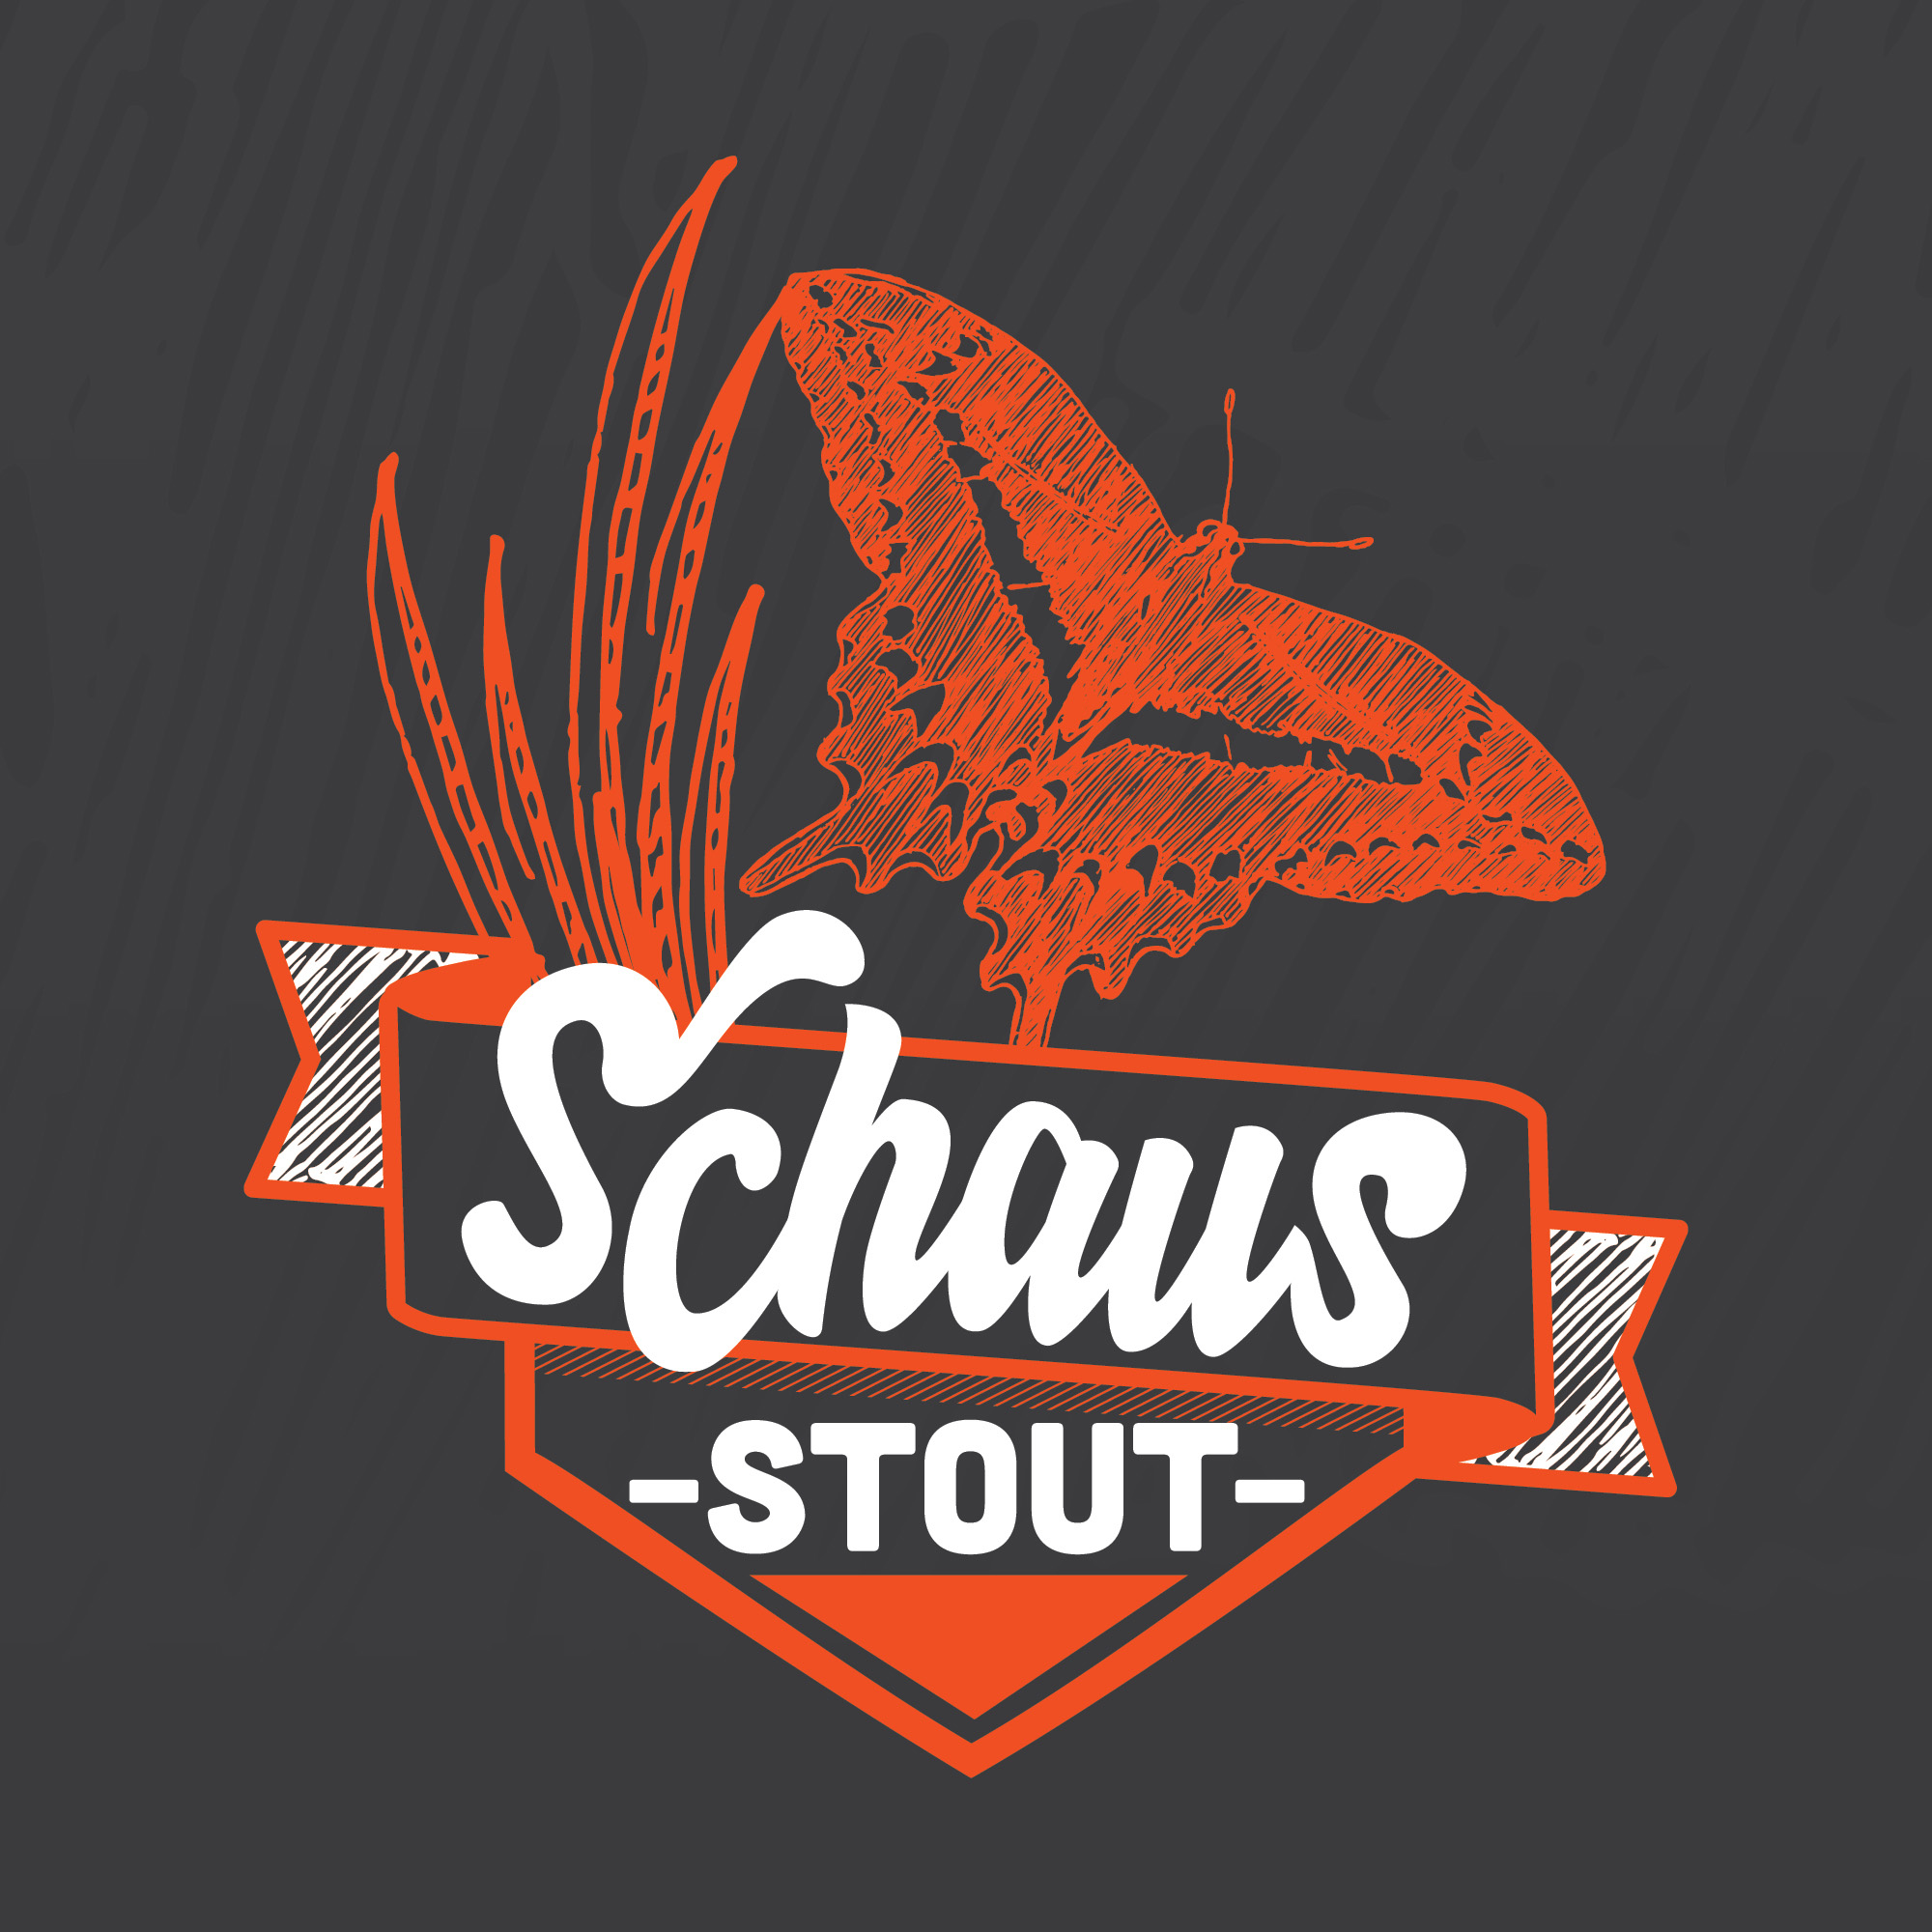 Schaus Stout beer logo